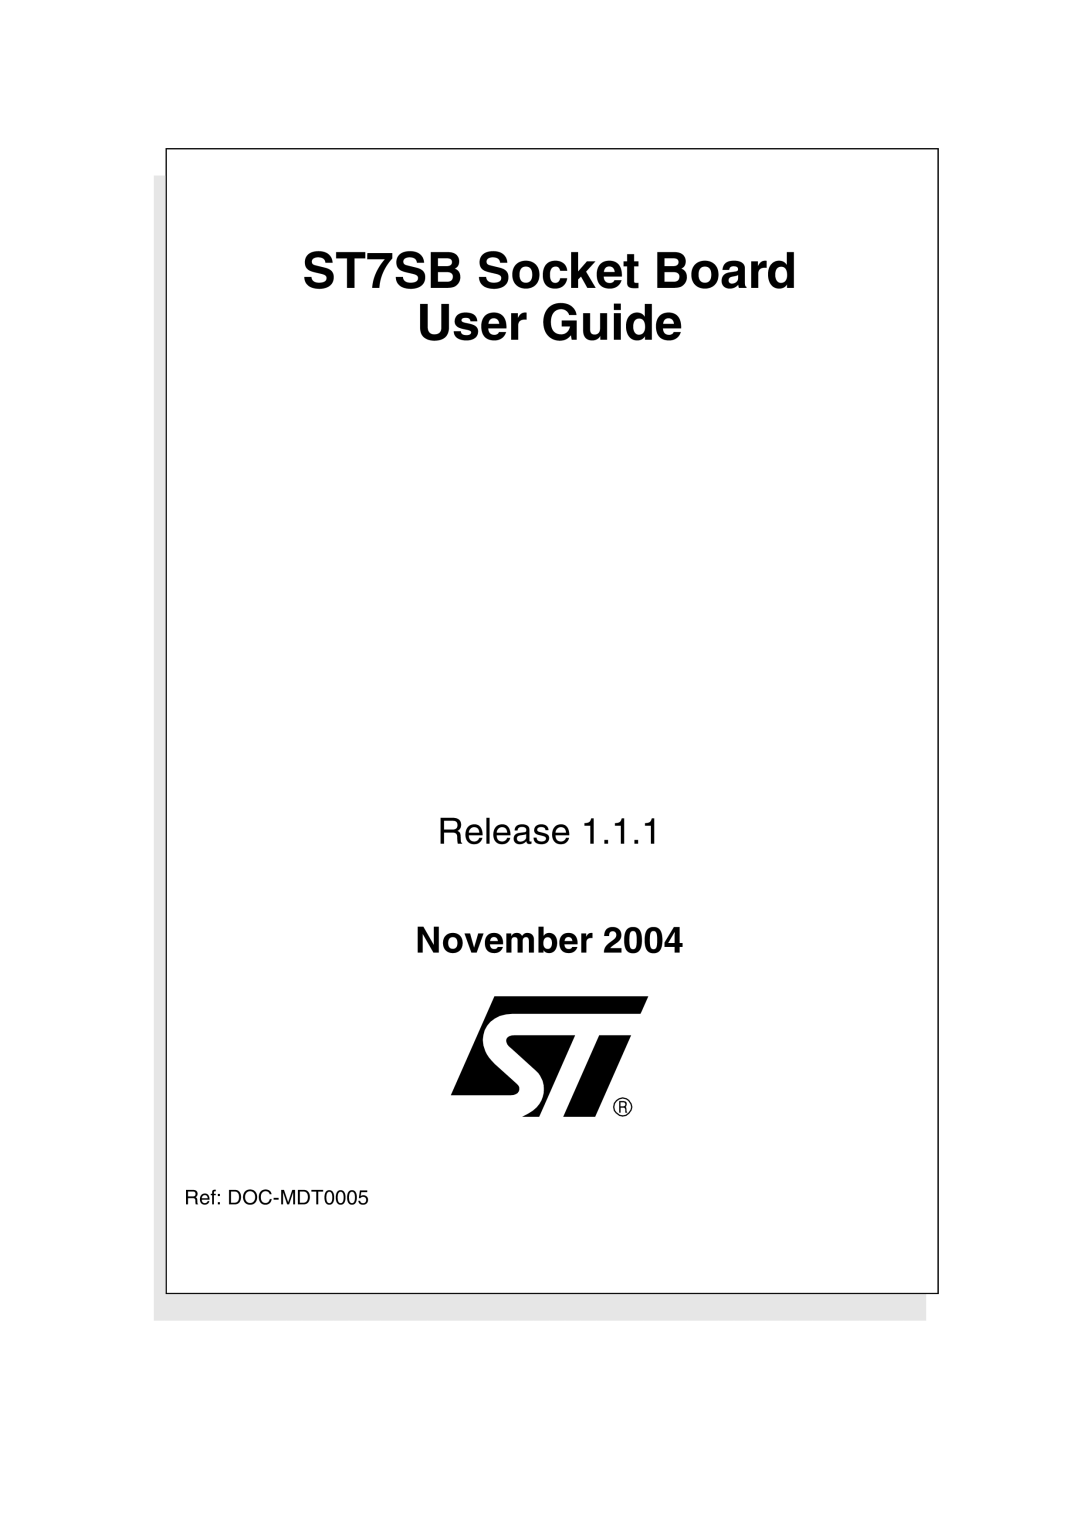 Philips manual ST7SB Socket Board User Guide, Release, November 